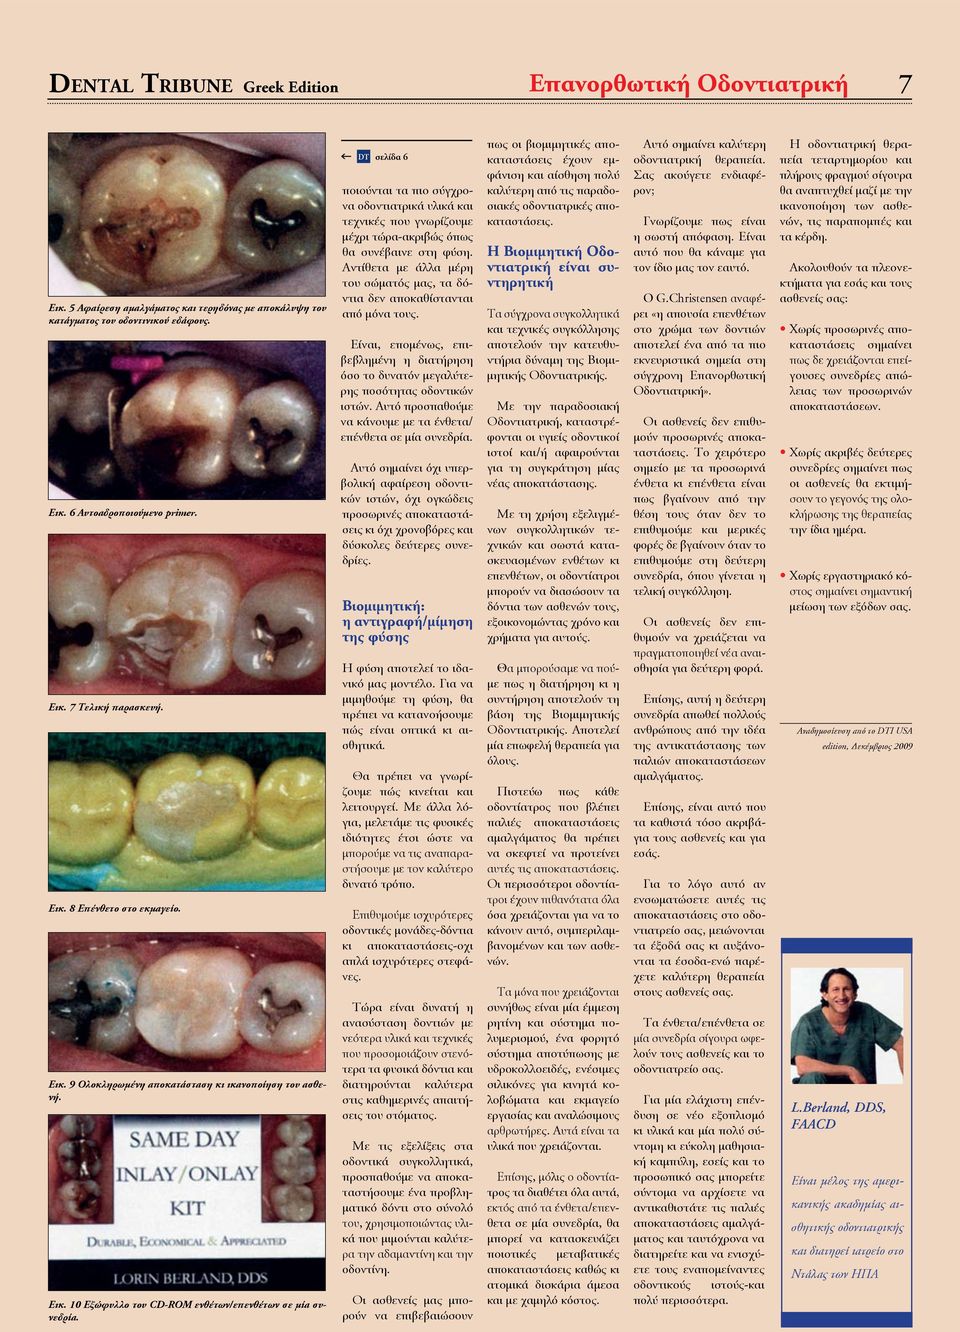 DT σελίδα 6 ποιούνται τα πιο σύγχρονα οδοντιατρικά υλικά και τεχνικές που γνωρίζουμε μέχρι τώρα-ακριβώς όπως θα συνέβαινε στη φύση.